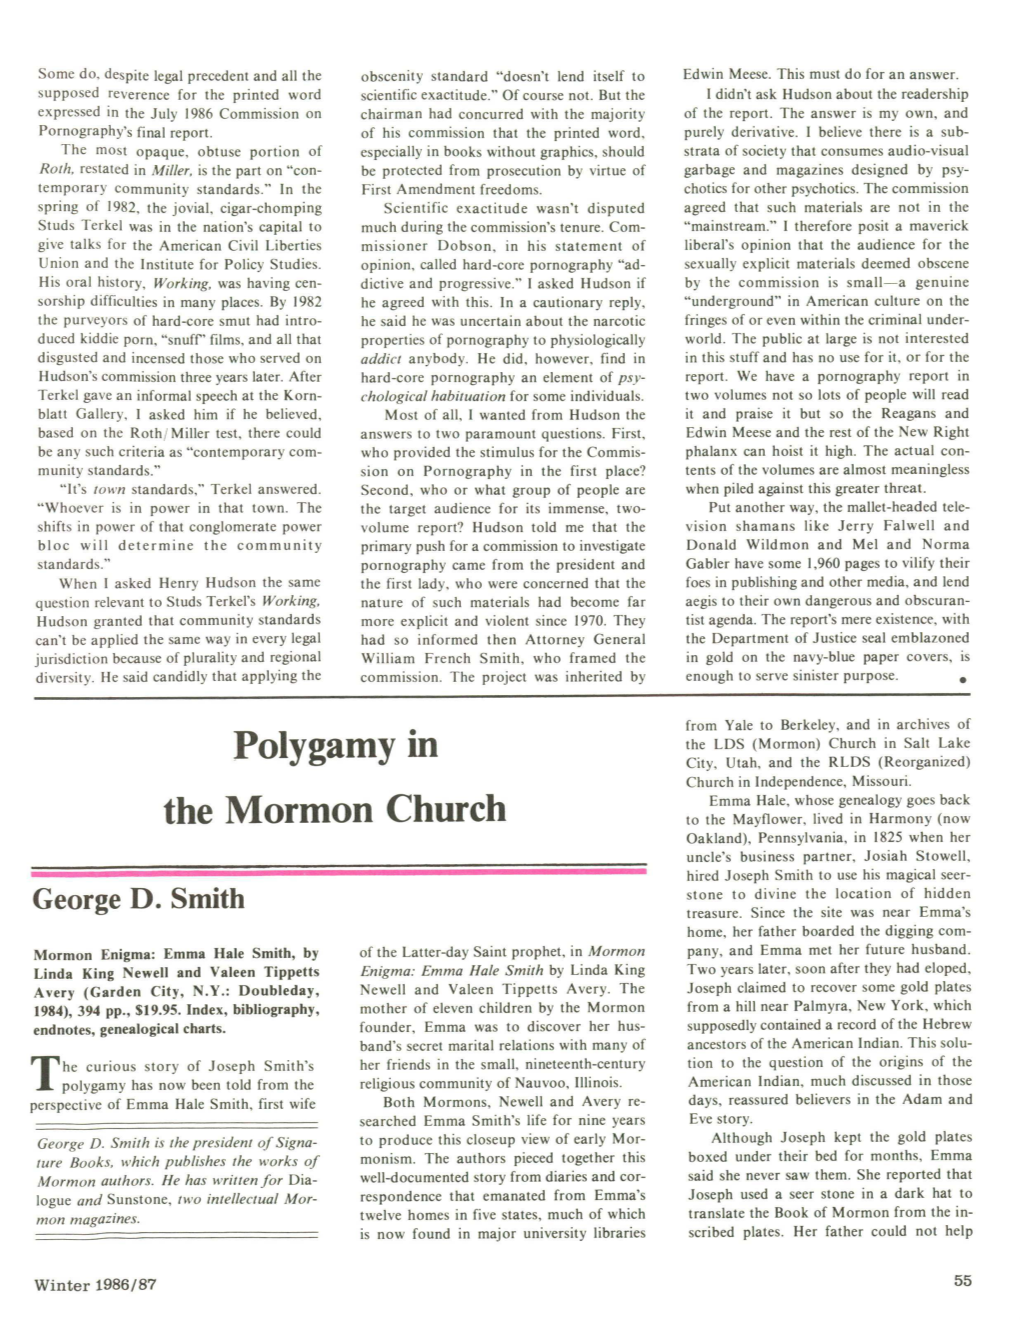 Polygamy in the Mormon Church